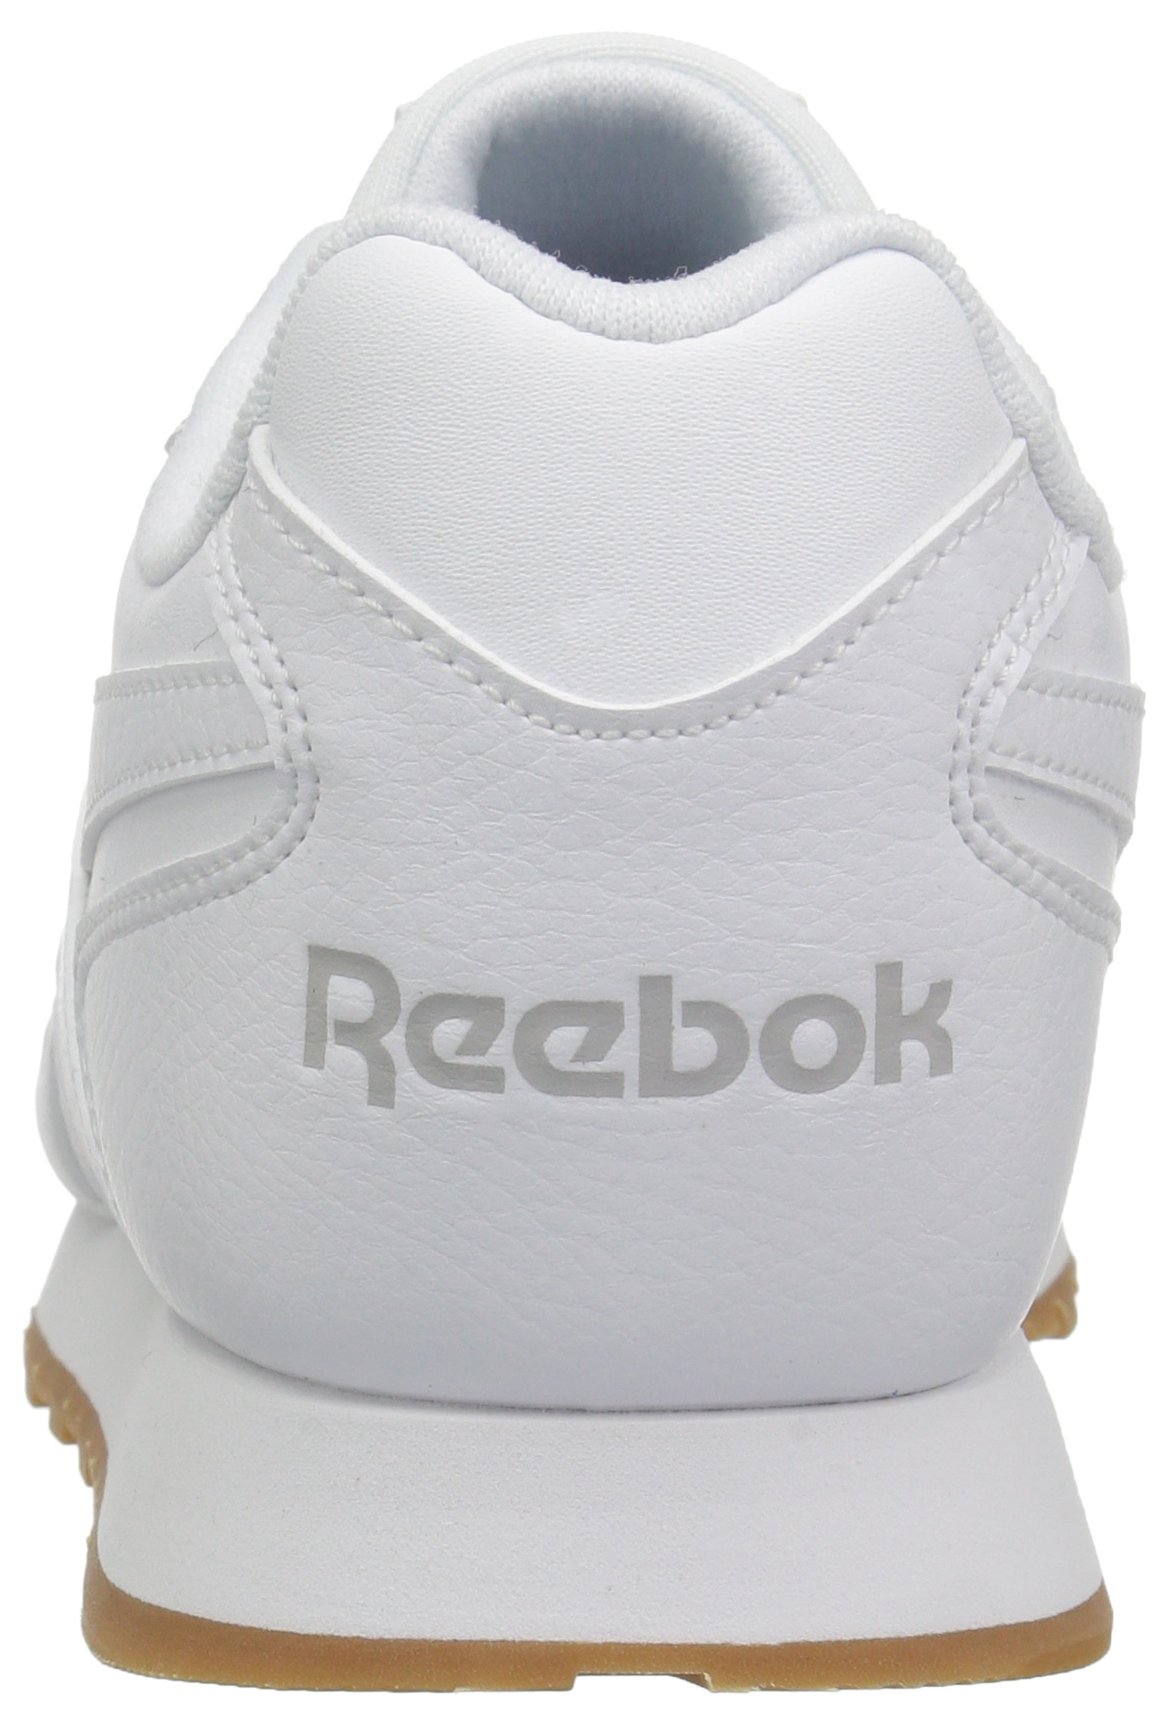 Reebok Women Classic Harman Run Sneaker, White/Gum, 5